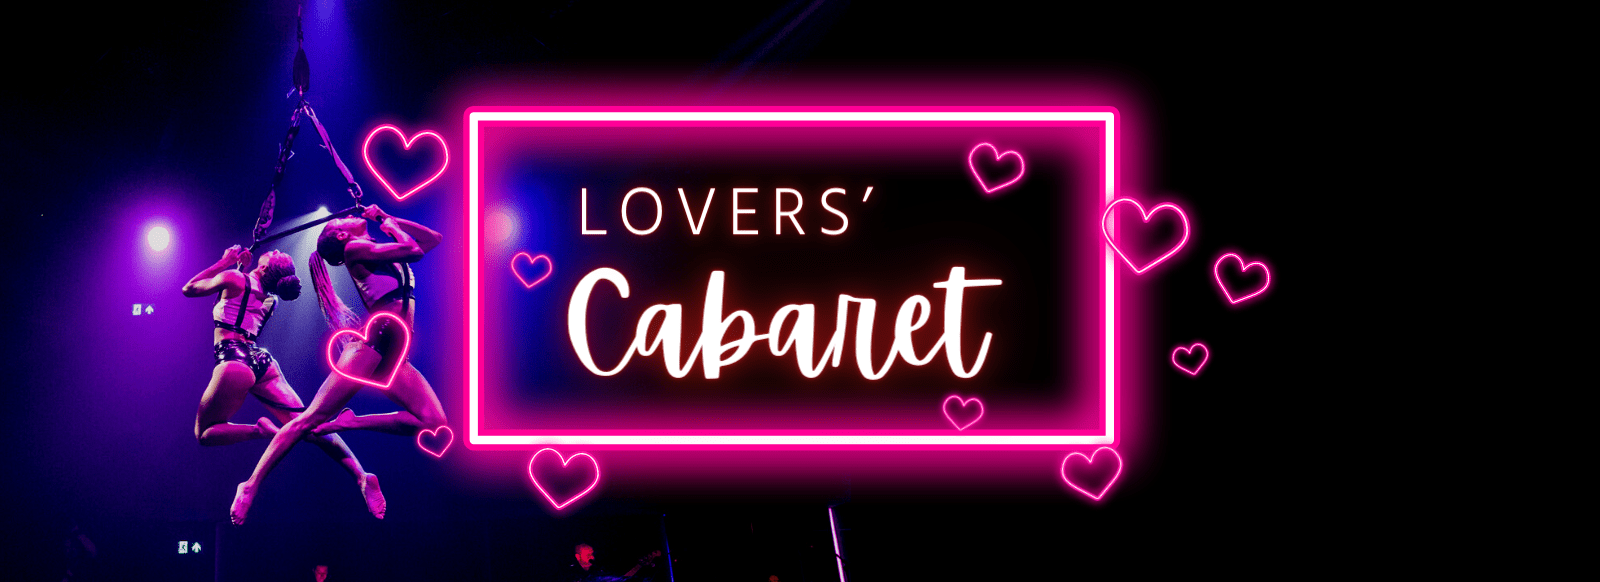 Valentine’s Day Lovers’ Cabaret